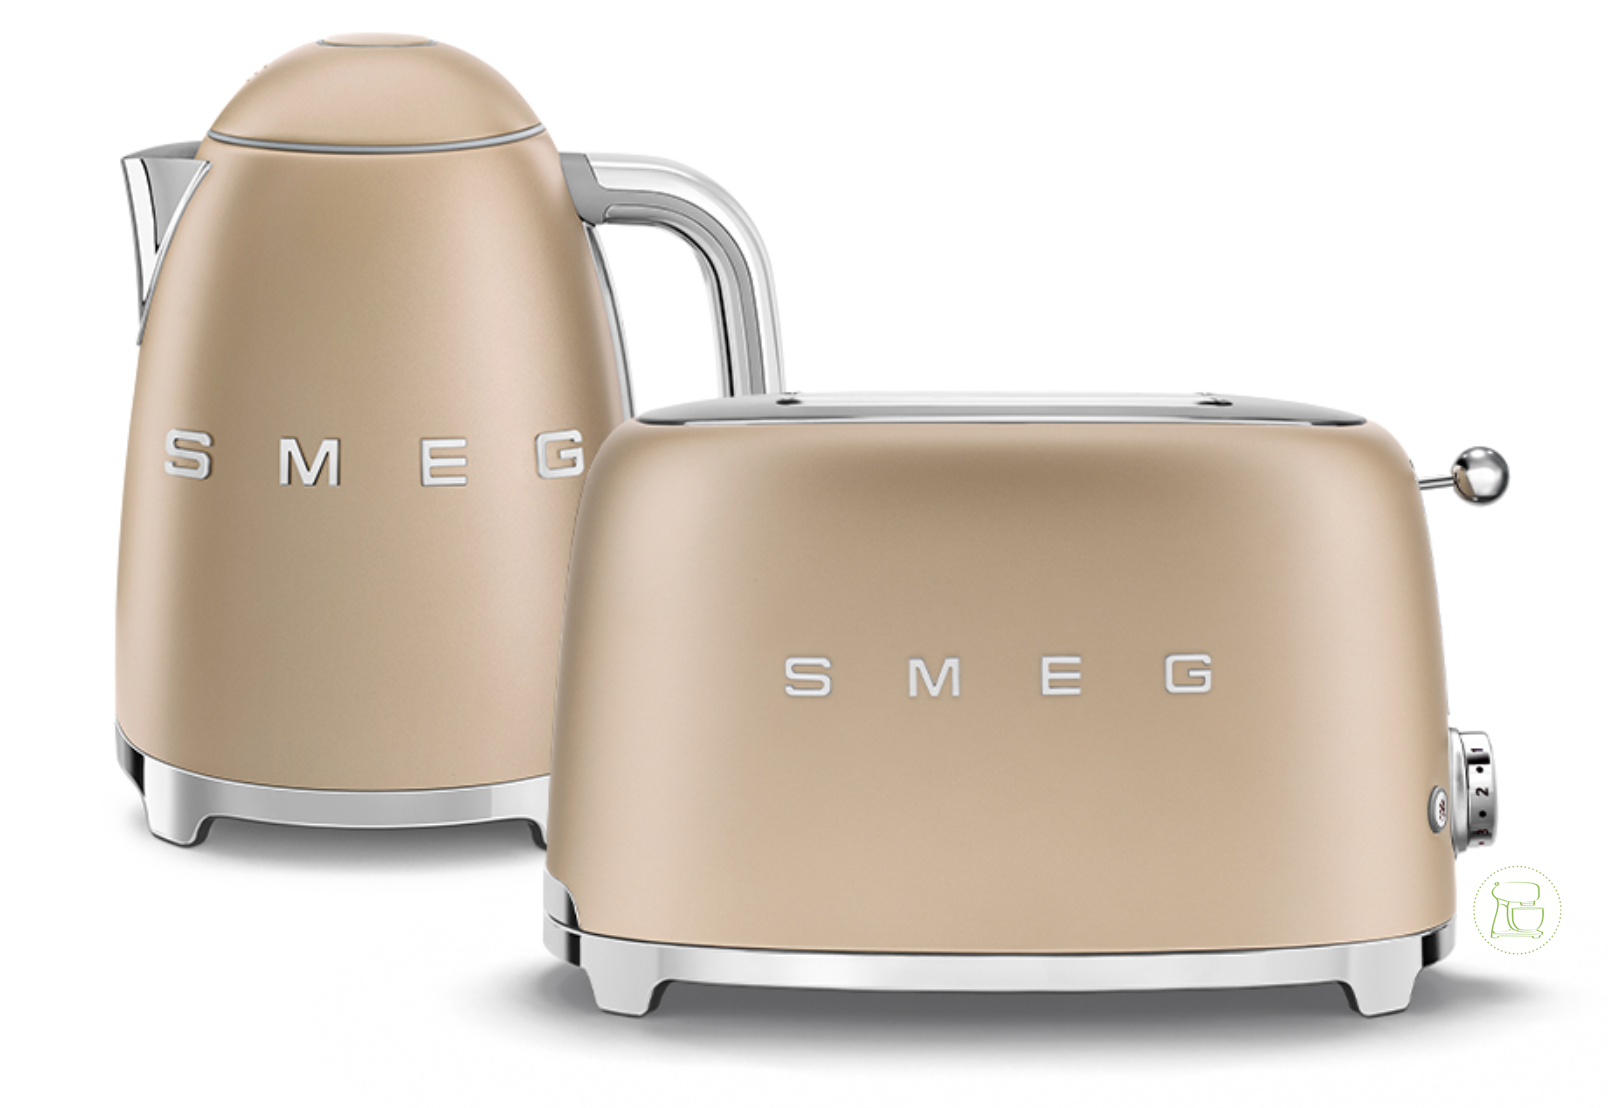 SMEG Wasserkocher - Toaster Set Champagner Matt